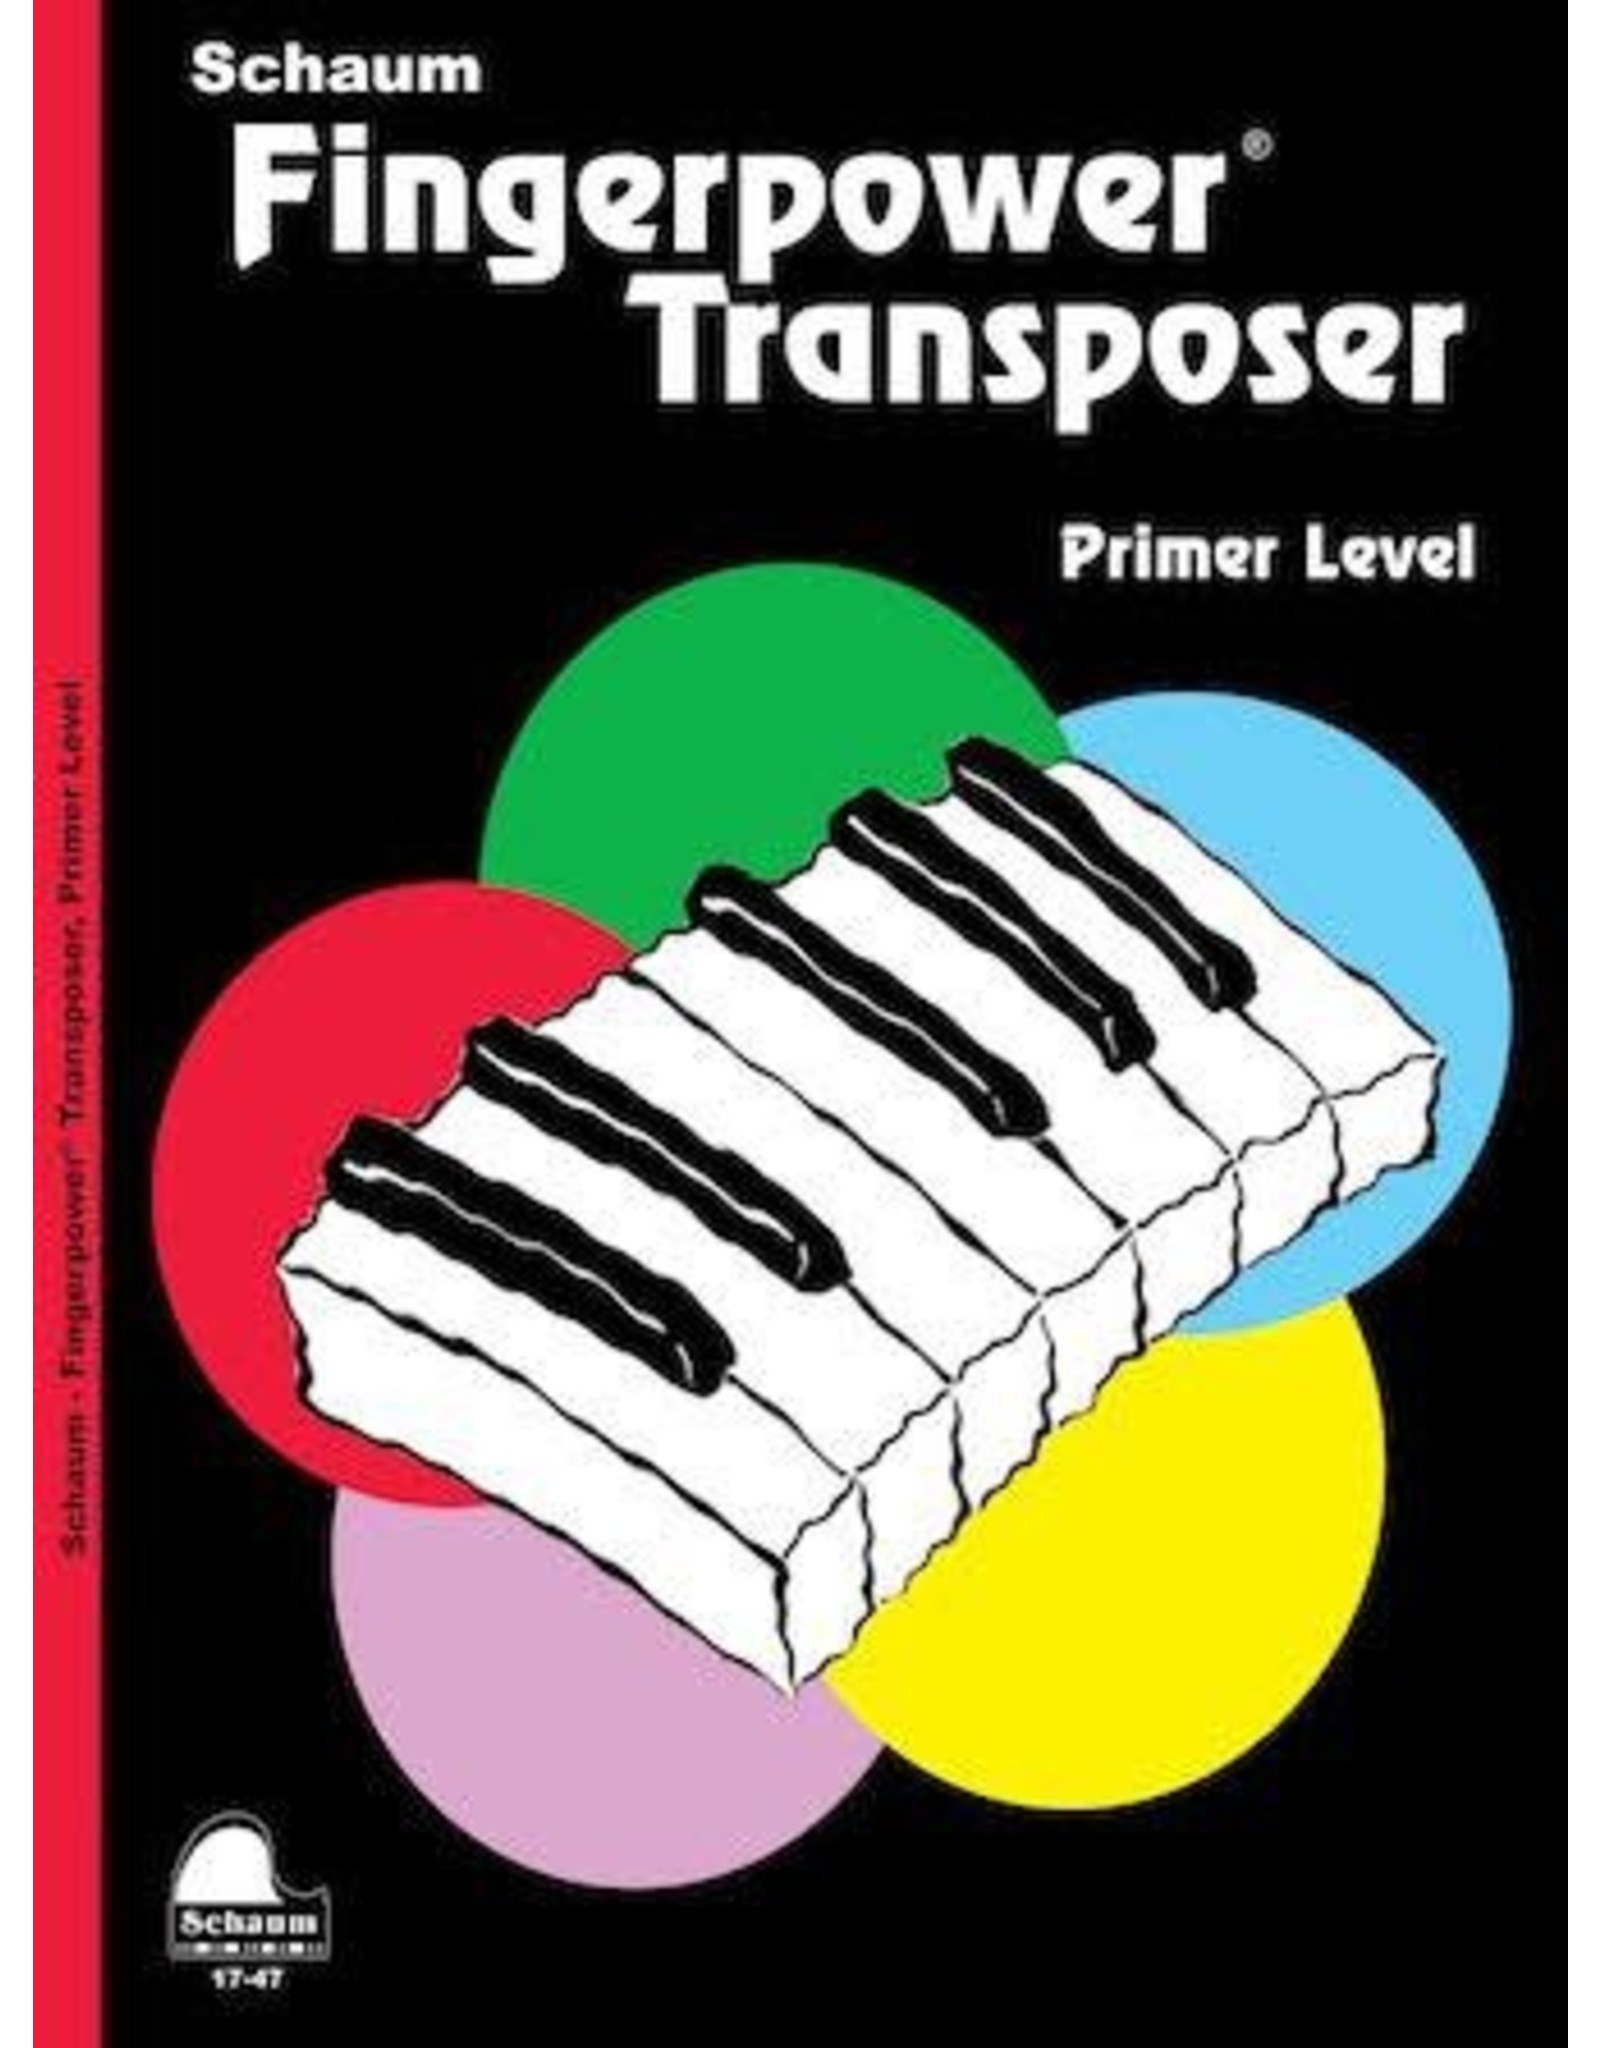 Hal Leonard Schaum Fingerpower Transposer Primer Level